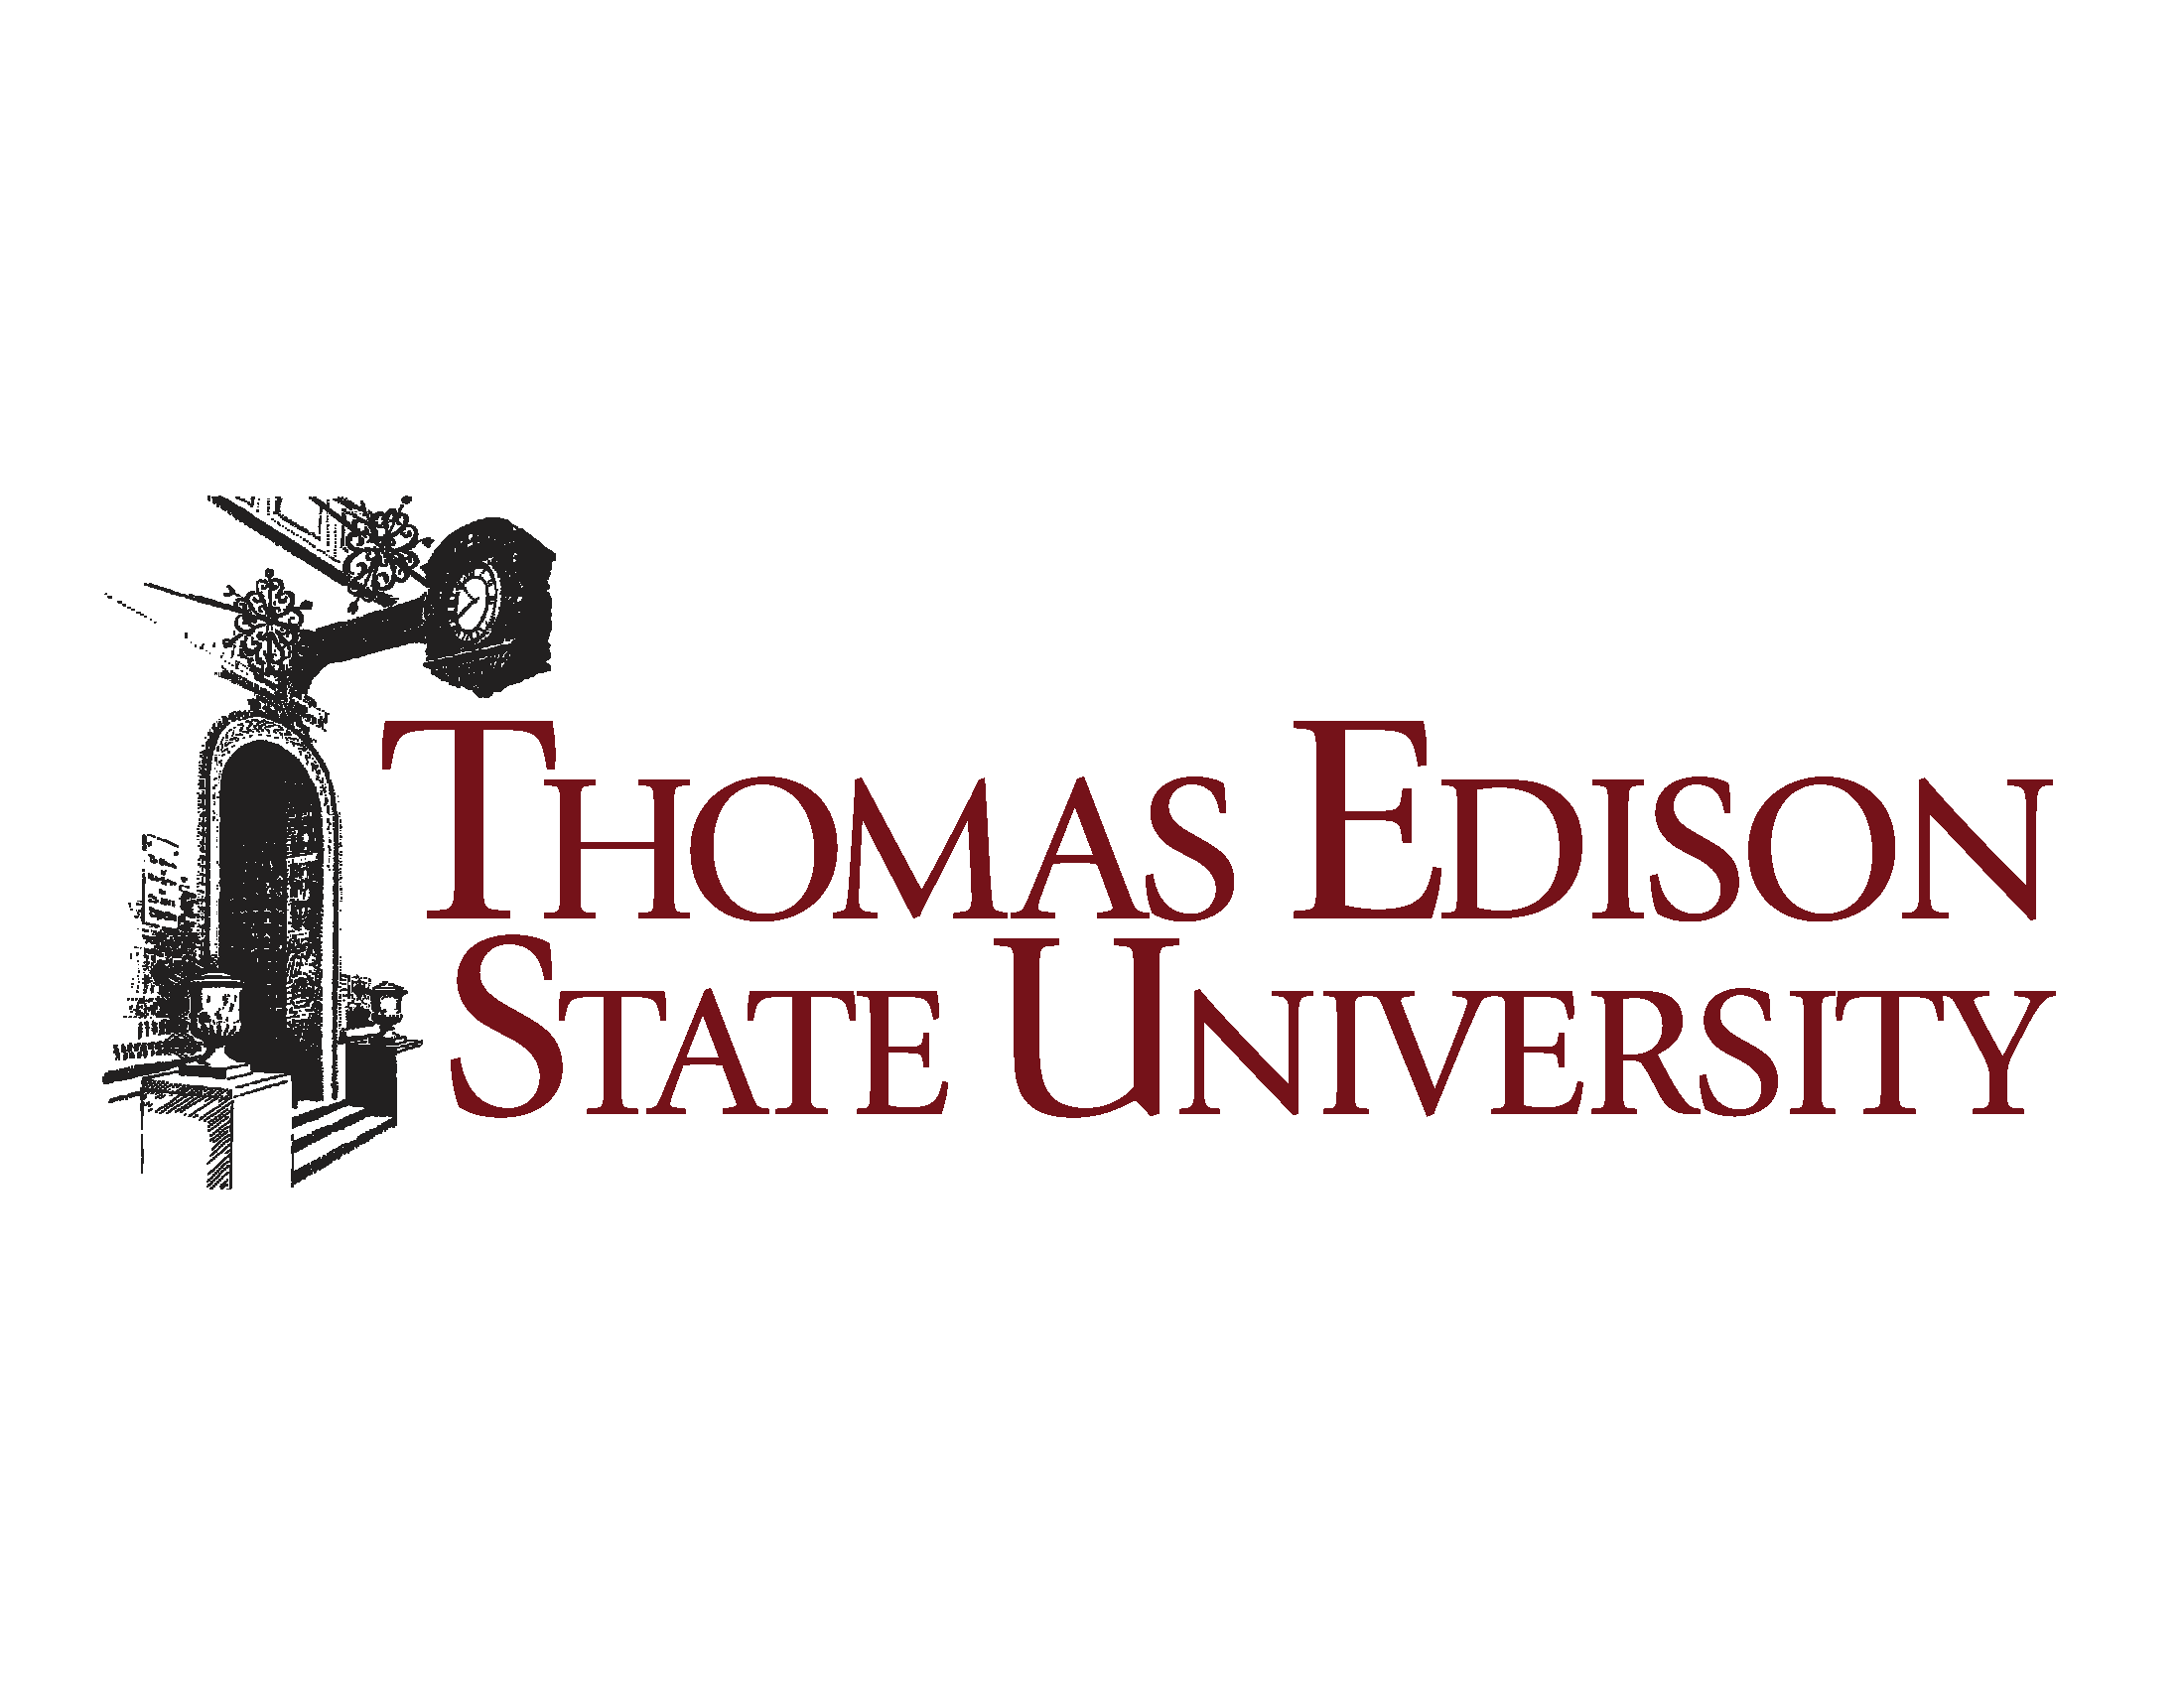 thomas edison state university